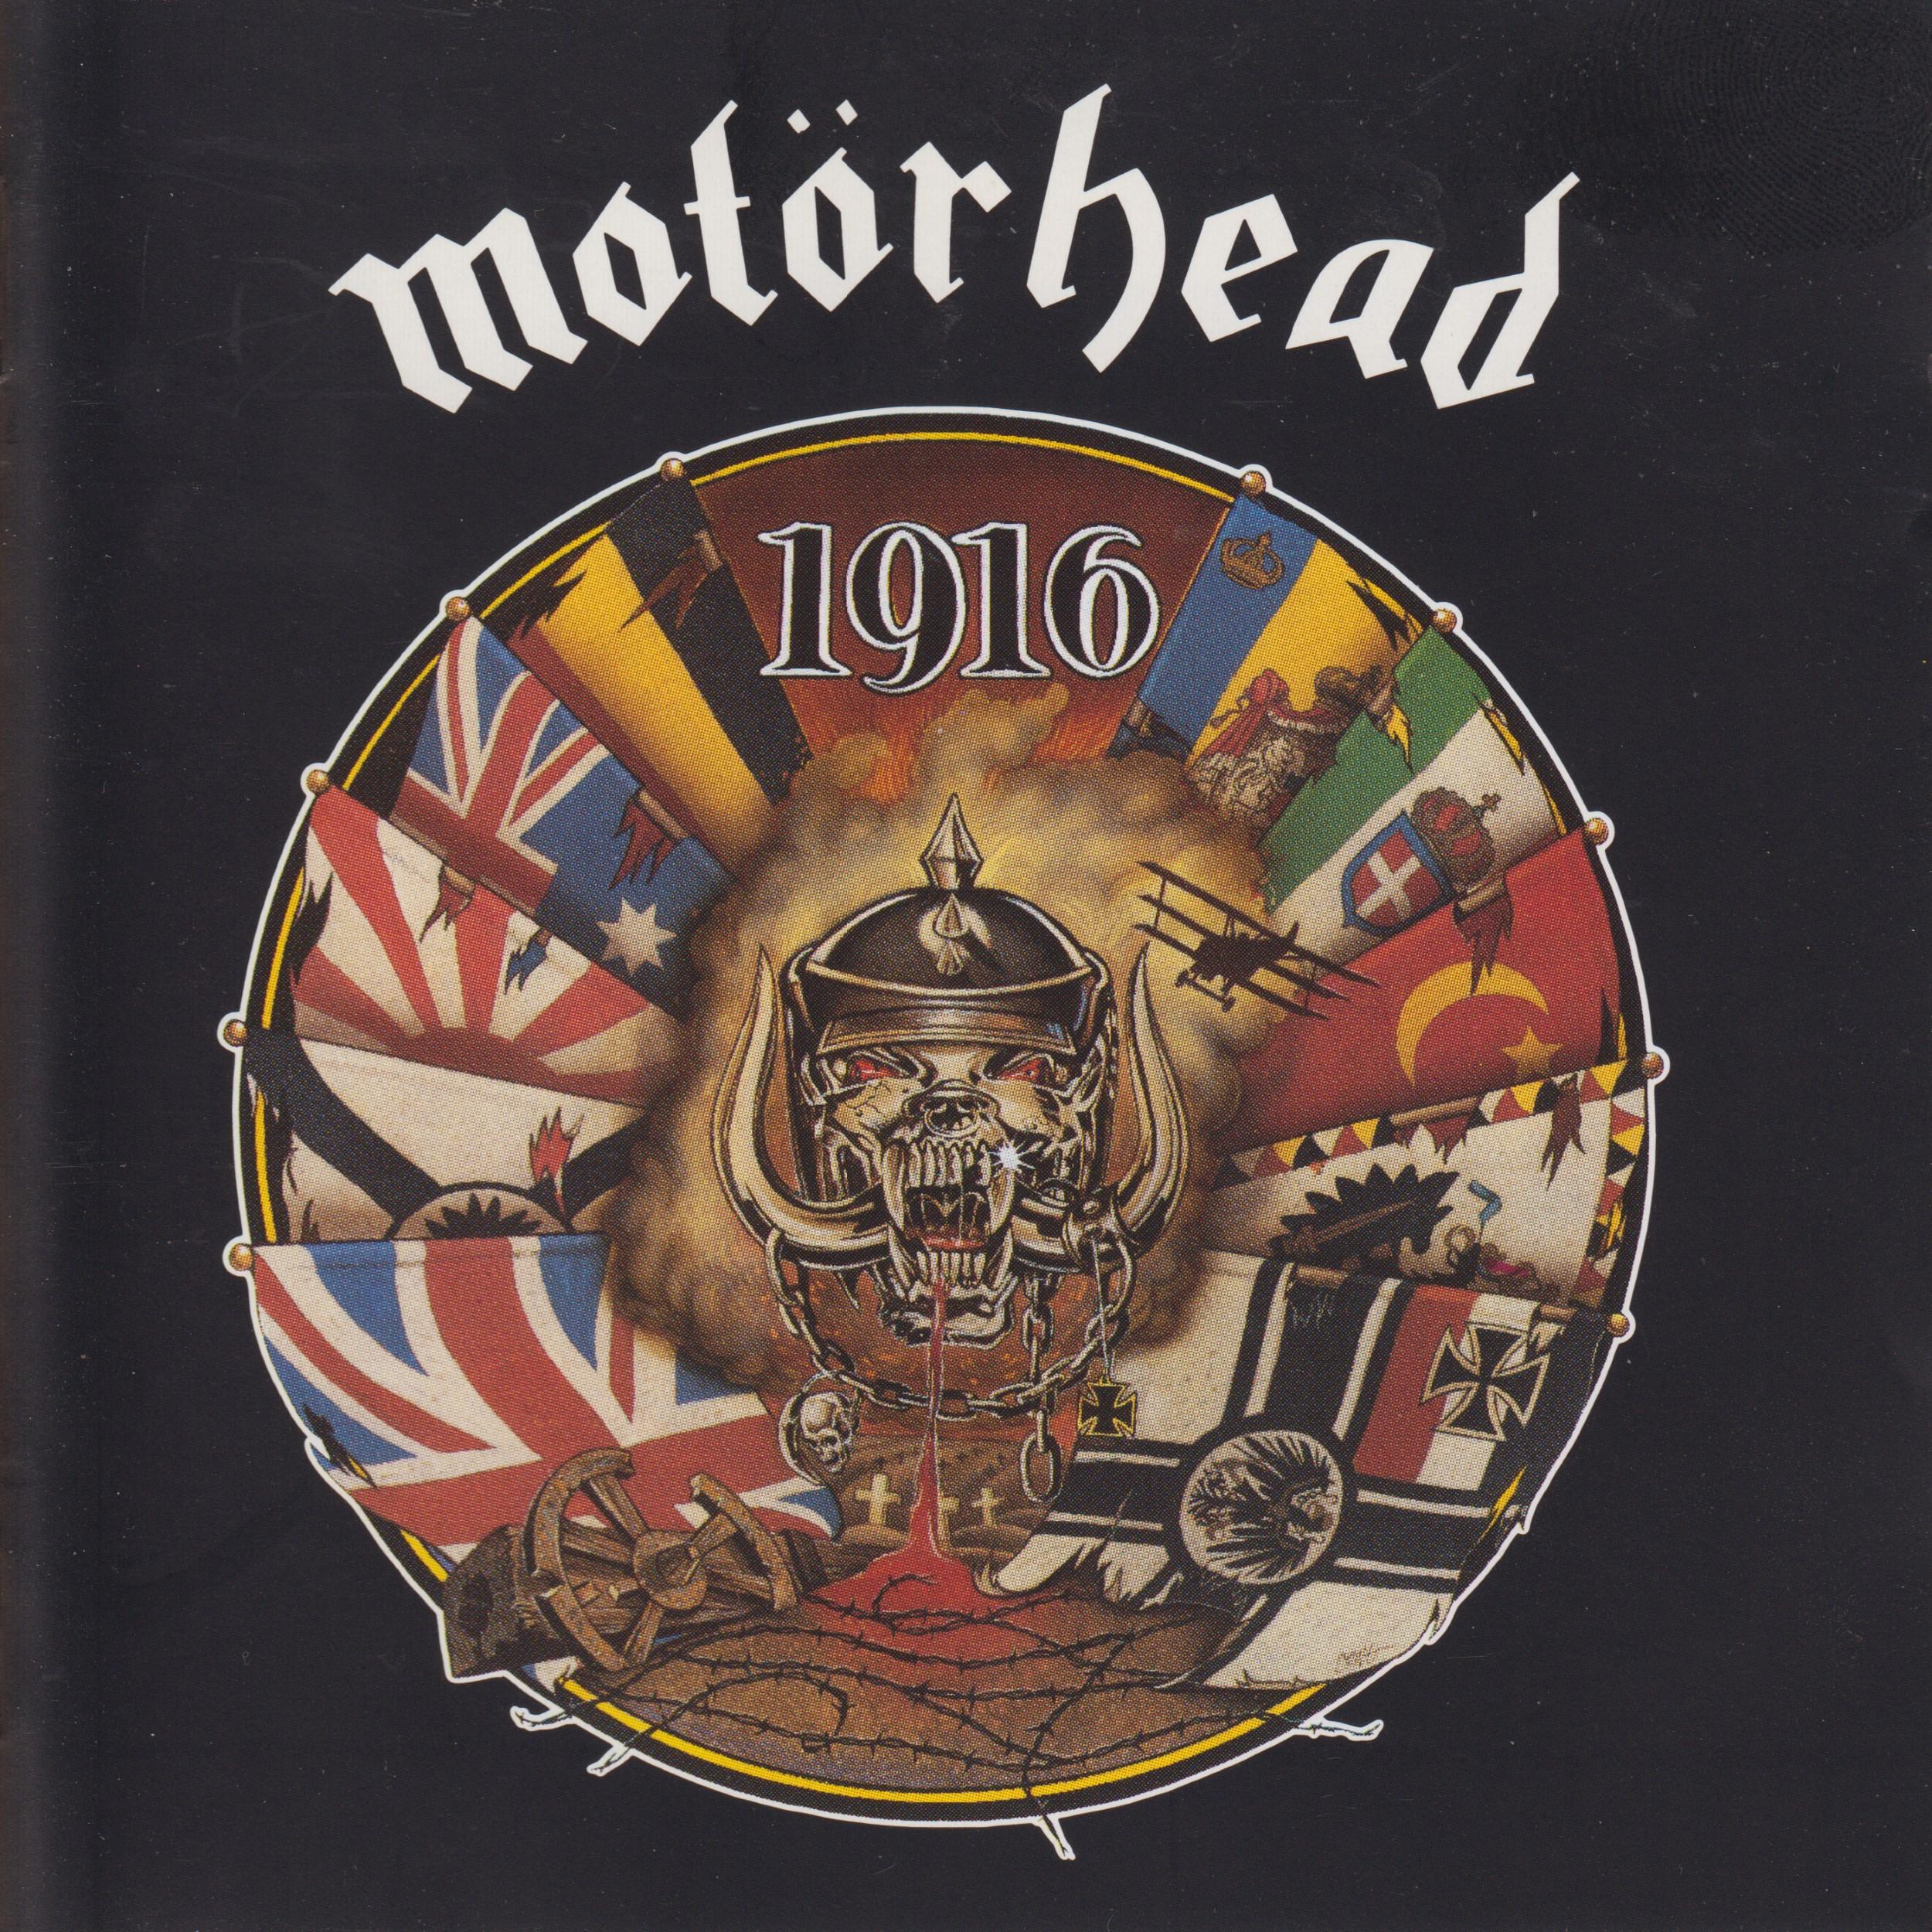 1916 - Motorhead (CD - 39) music collectible [Barcode 5099746748128] - Main Image 1